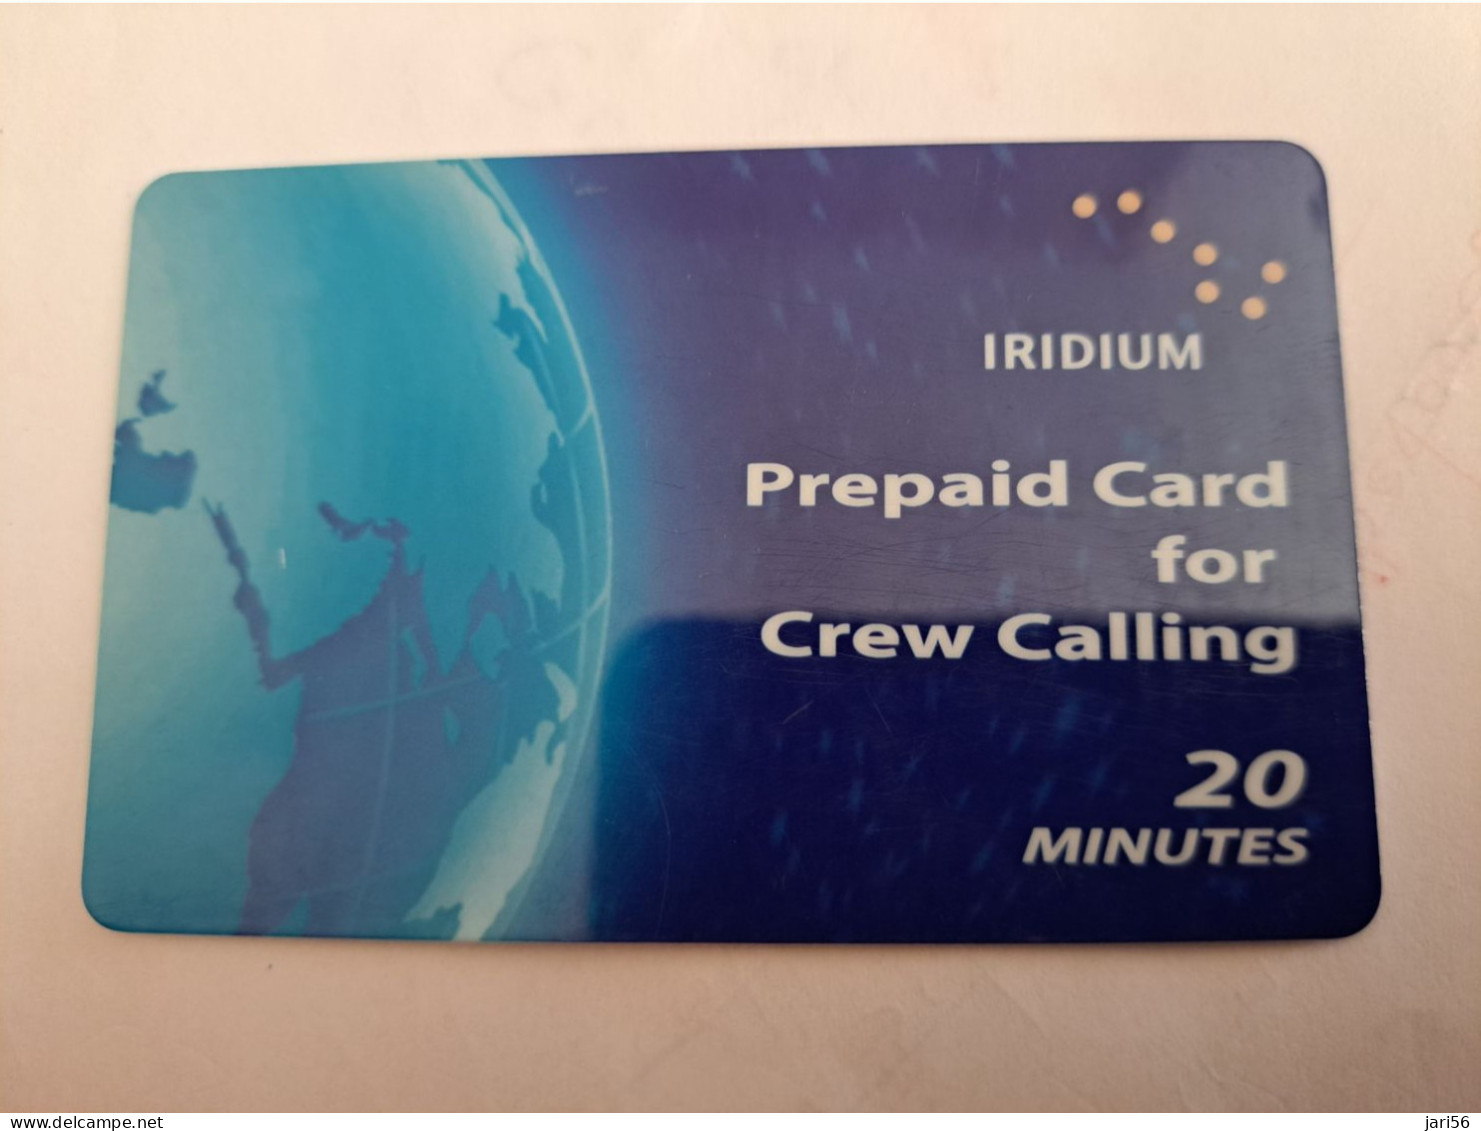 GREAT BRITAIN / IRIDIUM PREPAID/ CREW CALLING  /20 MINUTES   PREPAID CARD / USED       **14042** - [10] Collections